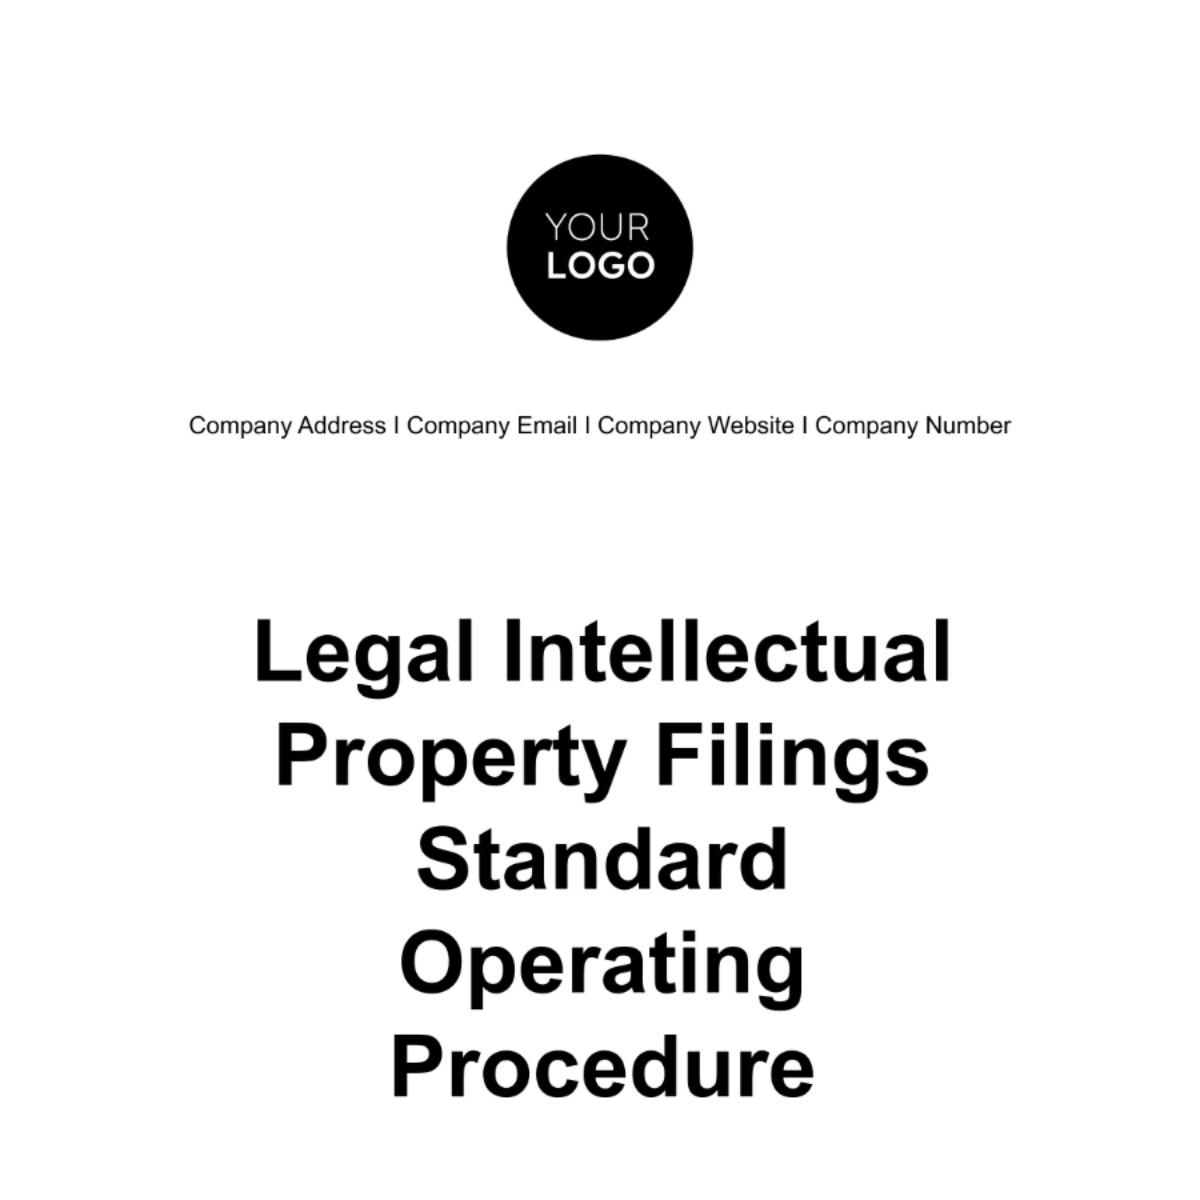 Legal Intellectual Property Filings Standard Operating Procedure Template